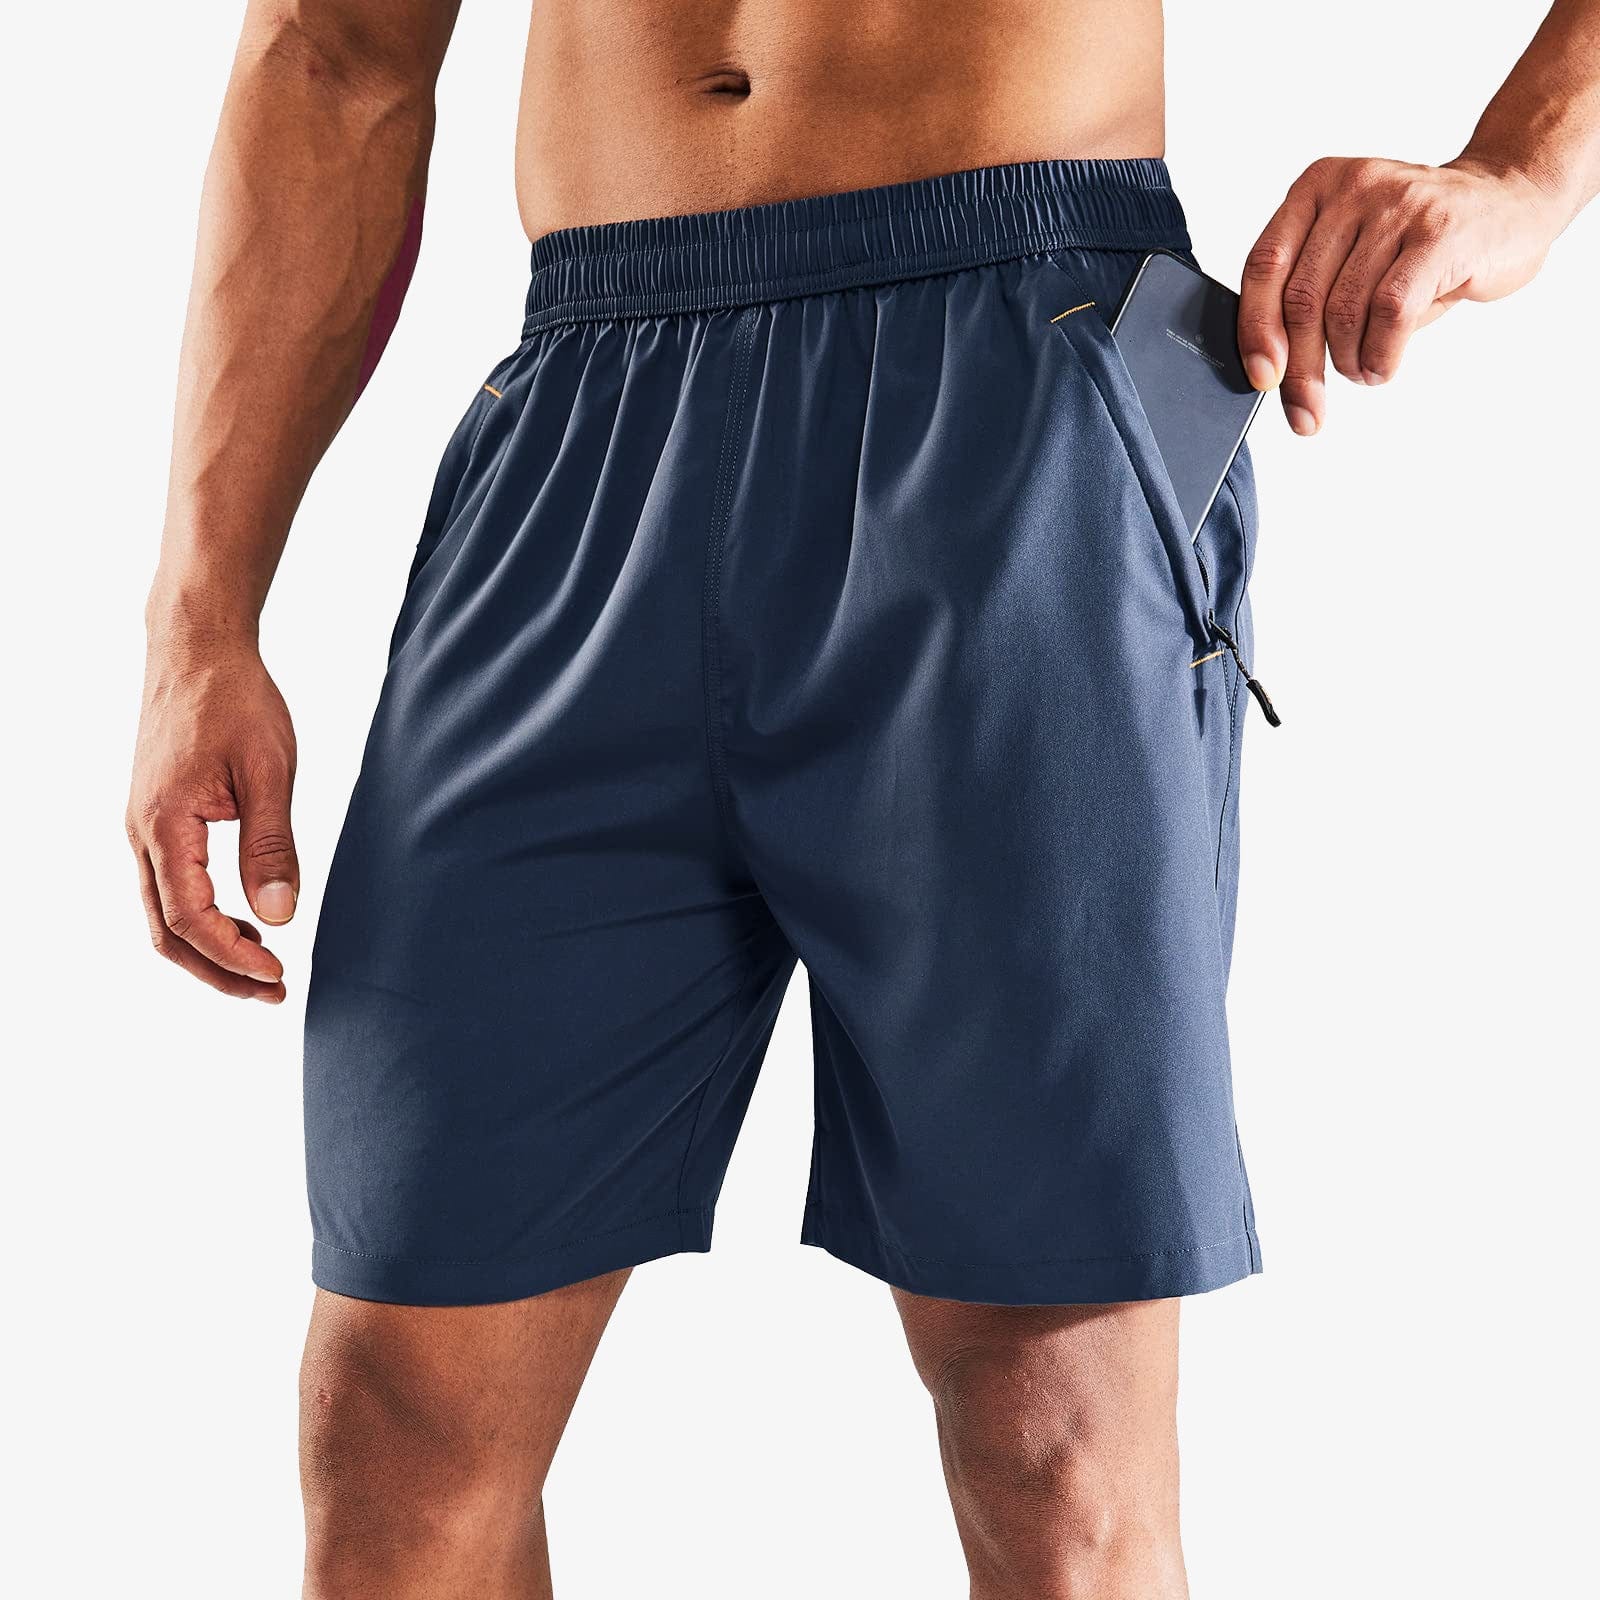 Men Quick Dry Running Shorts with Zipper Pocket 7 Inch Men&